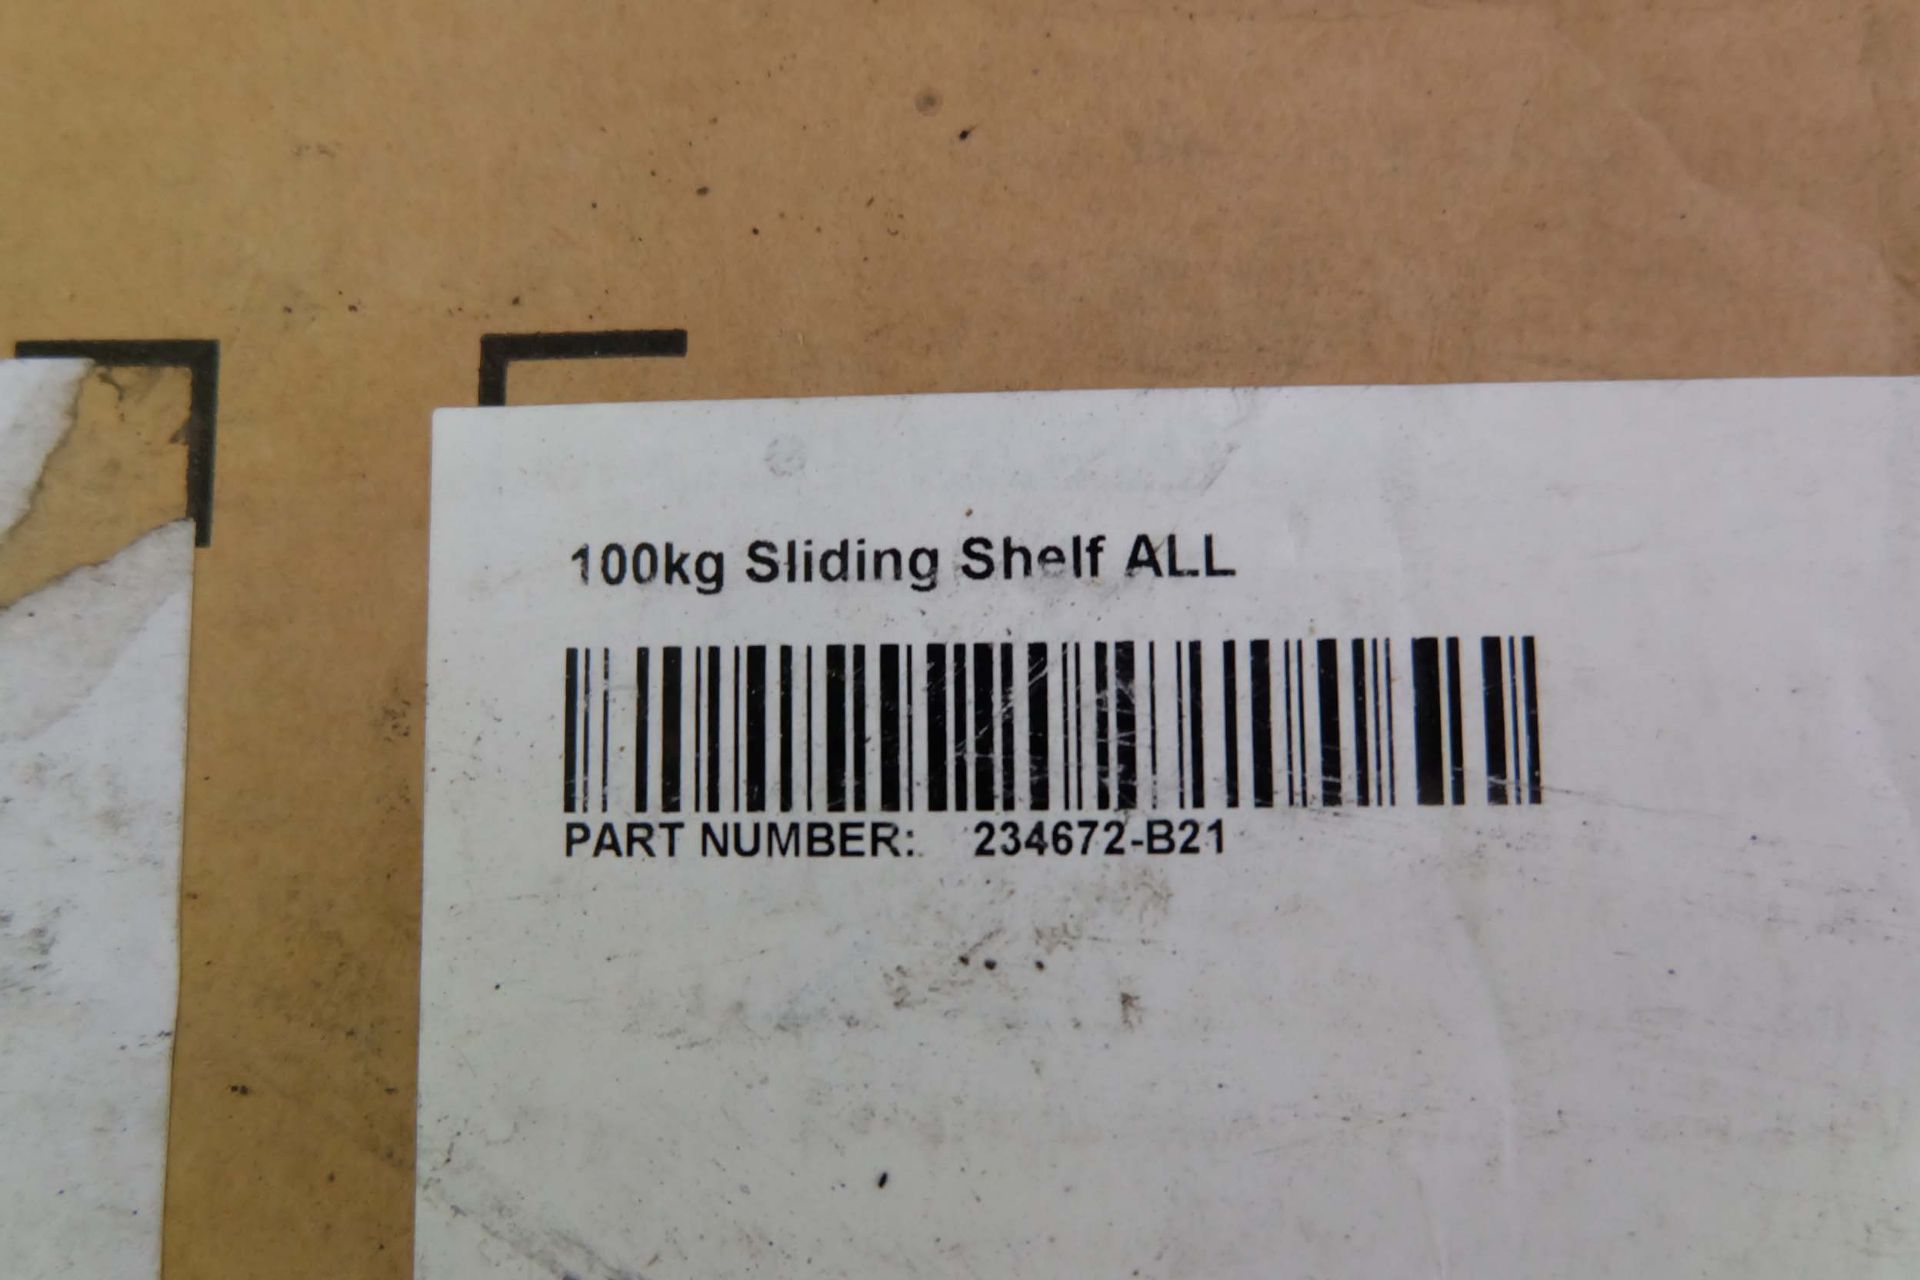 Hewlett Packard 100Kg Sliding Shelf Kit Width 500mm. Length 600mm. As New In Box. - Image 6 of 6